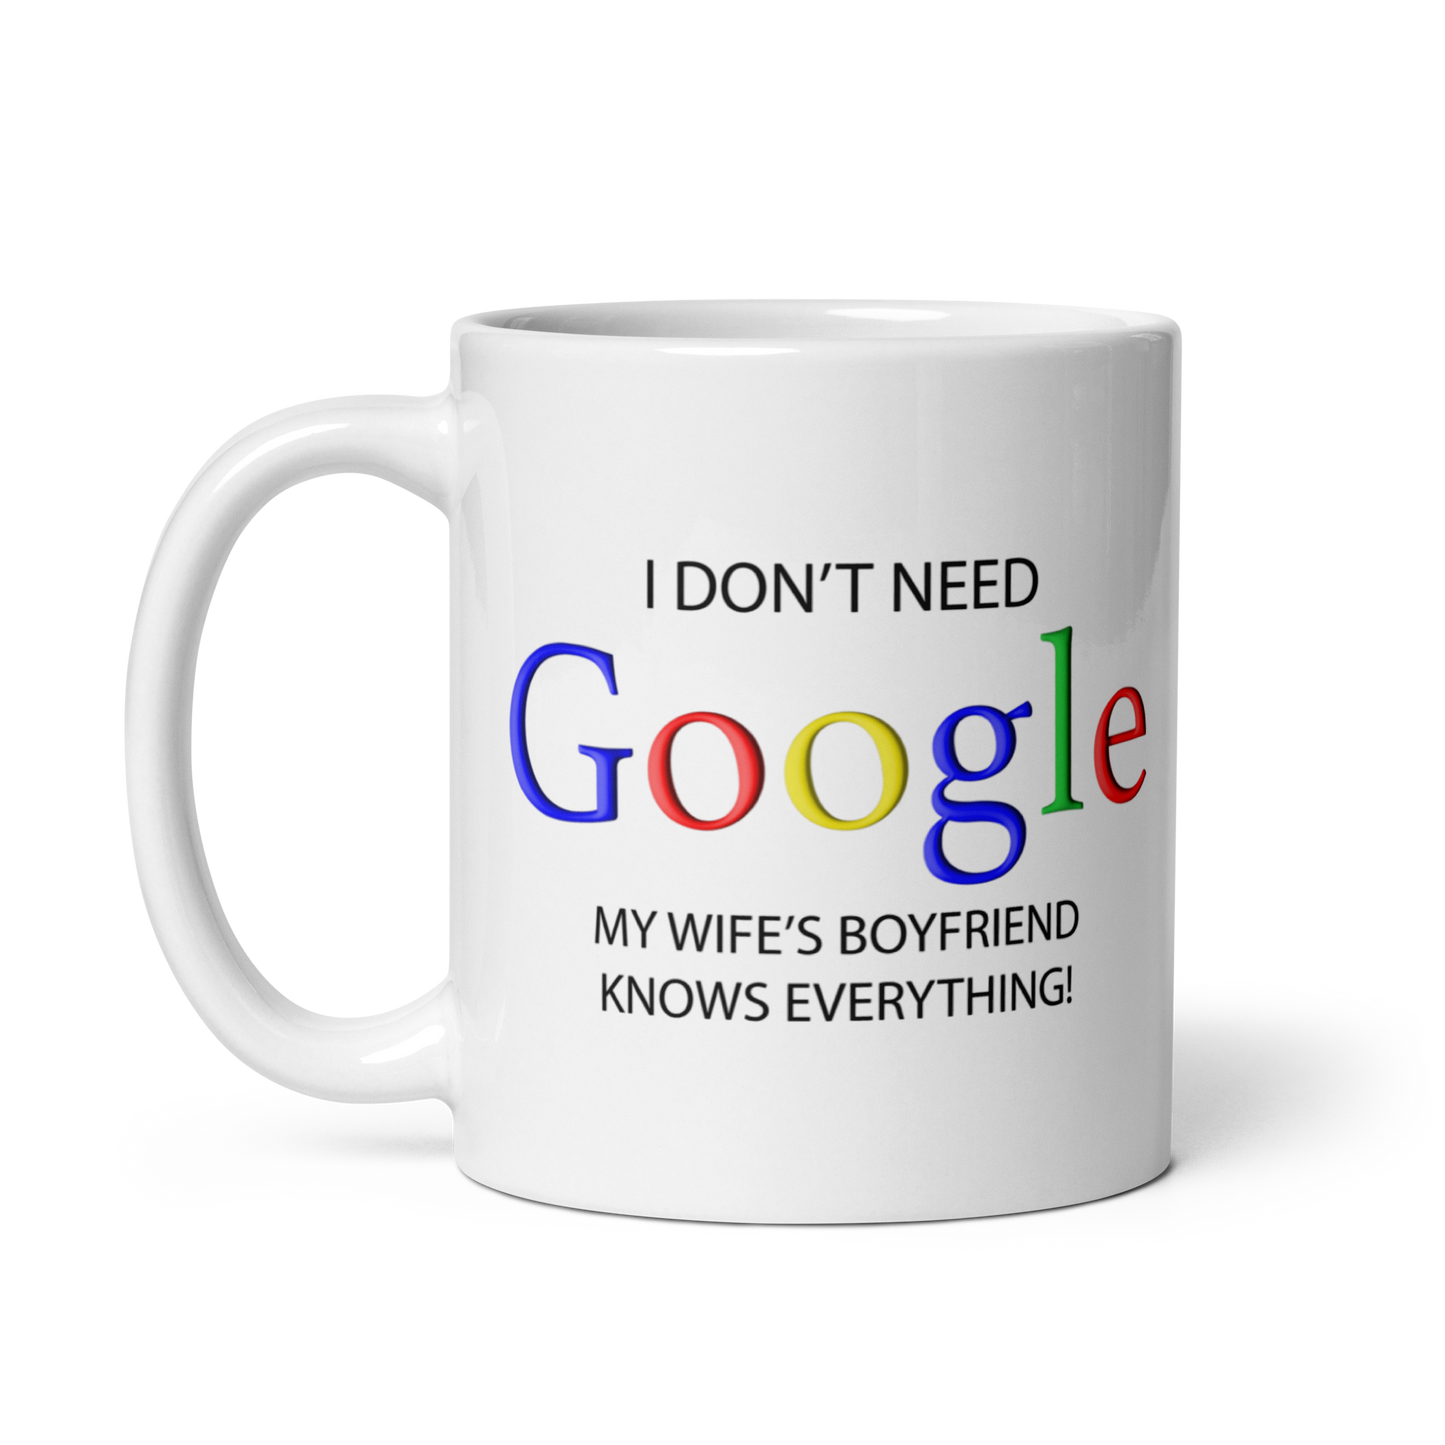 I Don't Need Google My Wife's Boyfriend Knows Everything Mug.